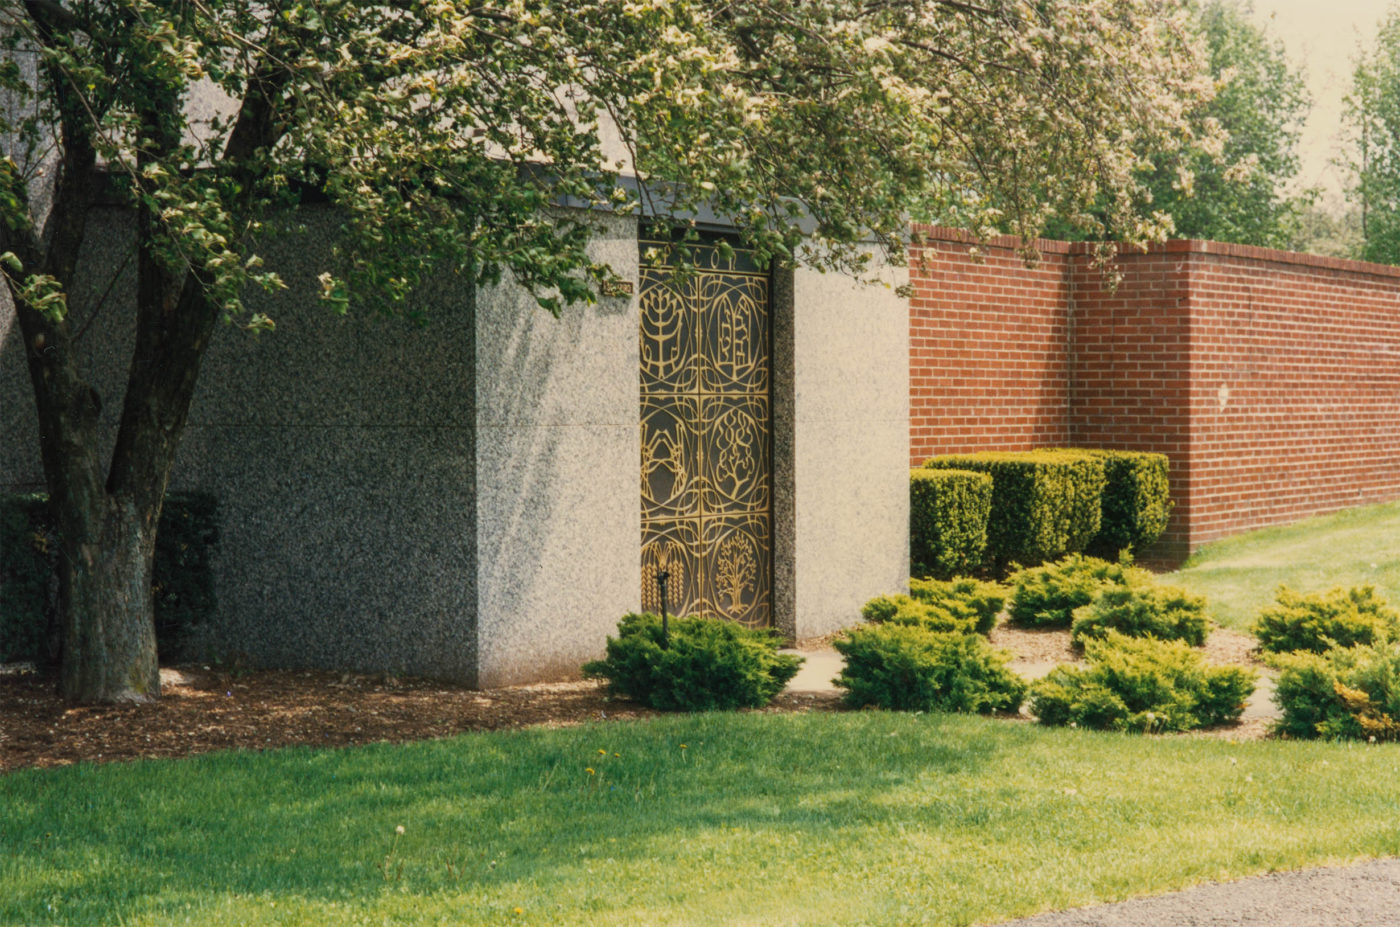 Mausoleum door at Beth Israel Memorial Park